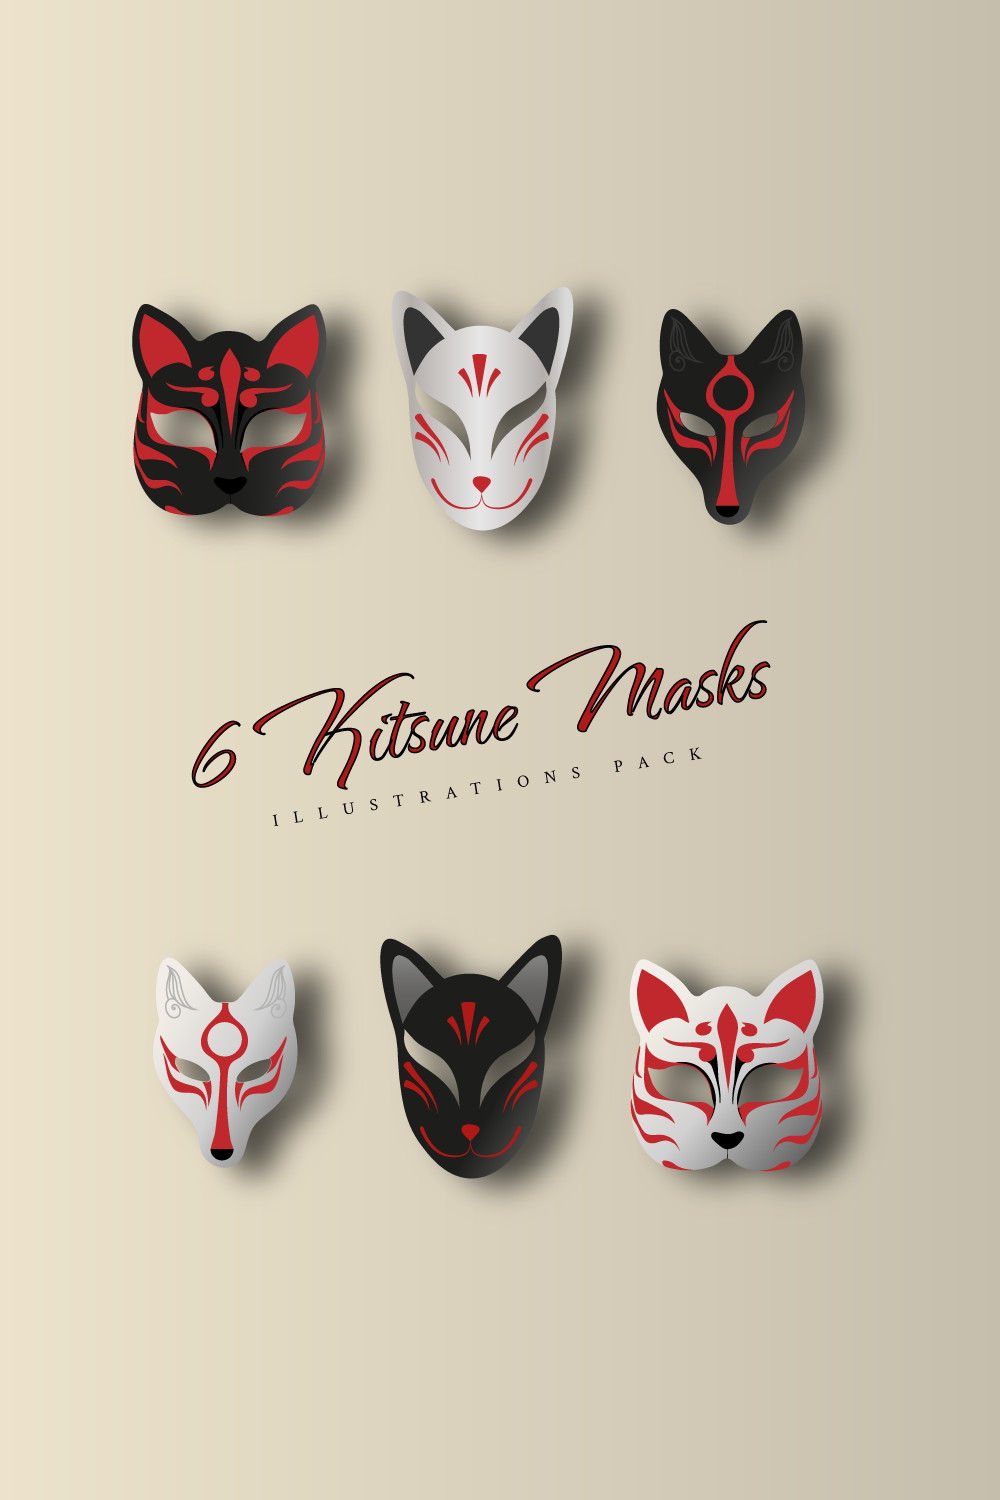 Kitsune Fox Masks Illustrations Pack examples.